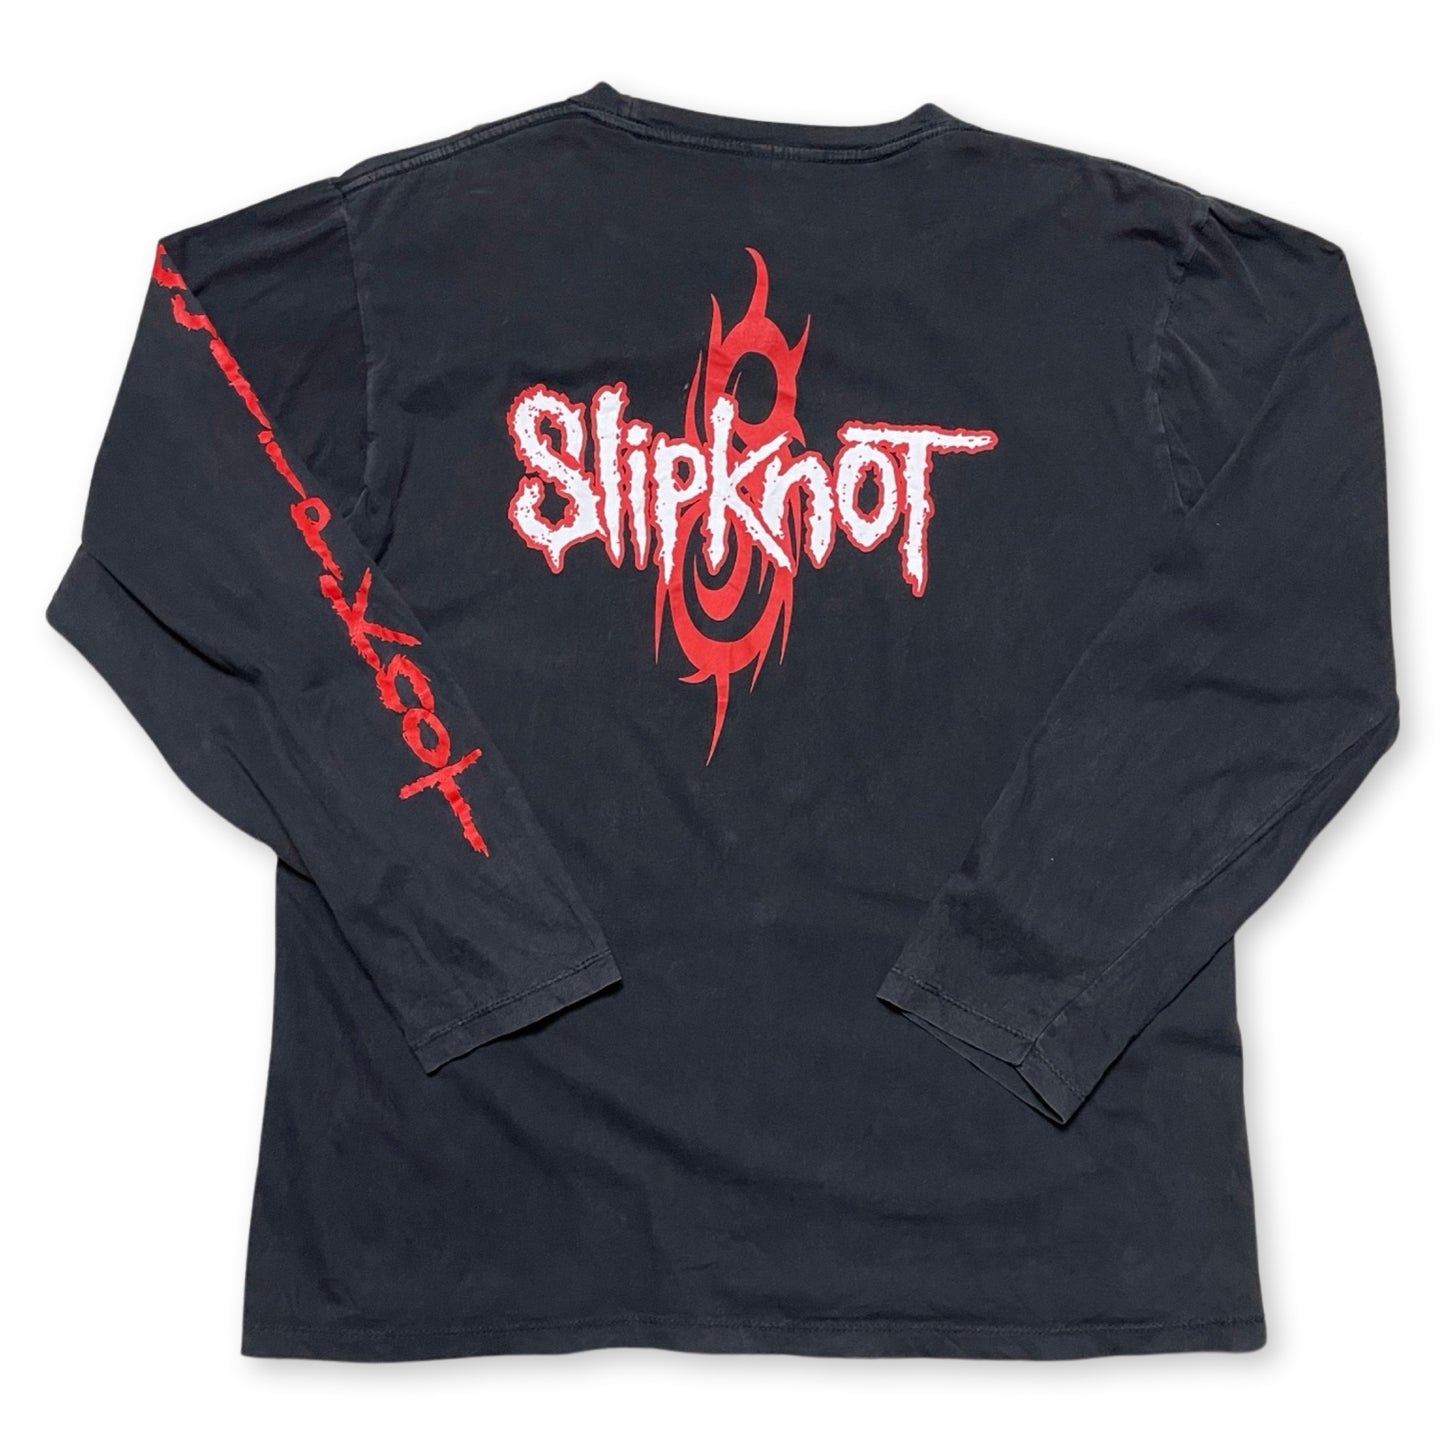 Slipknot Band Longsleeves (Fits Large)